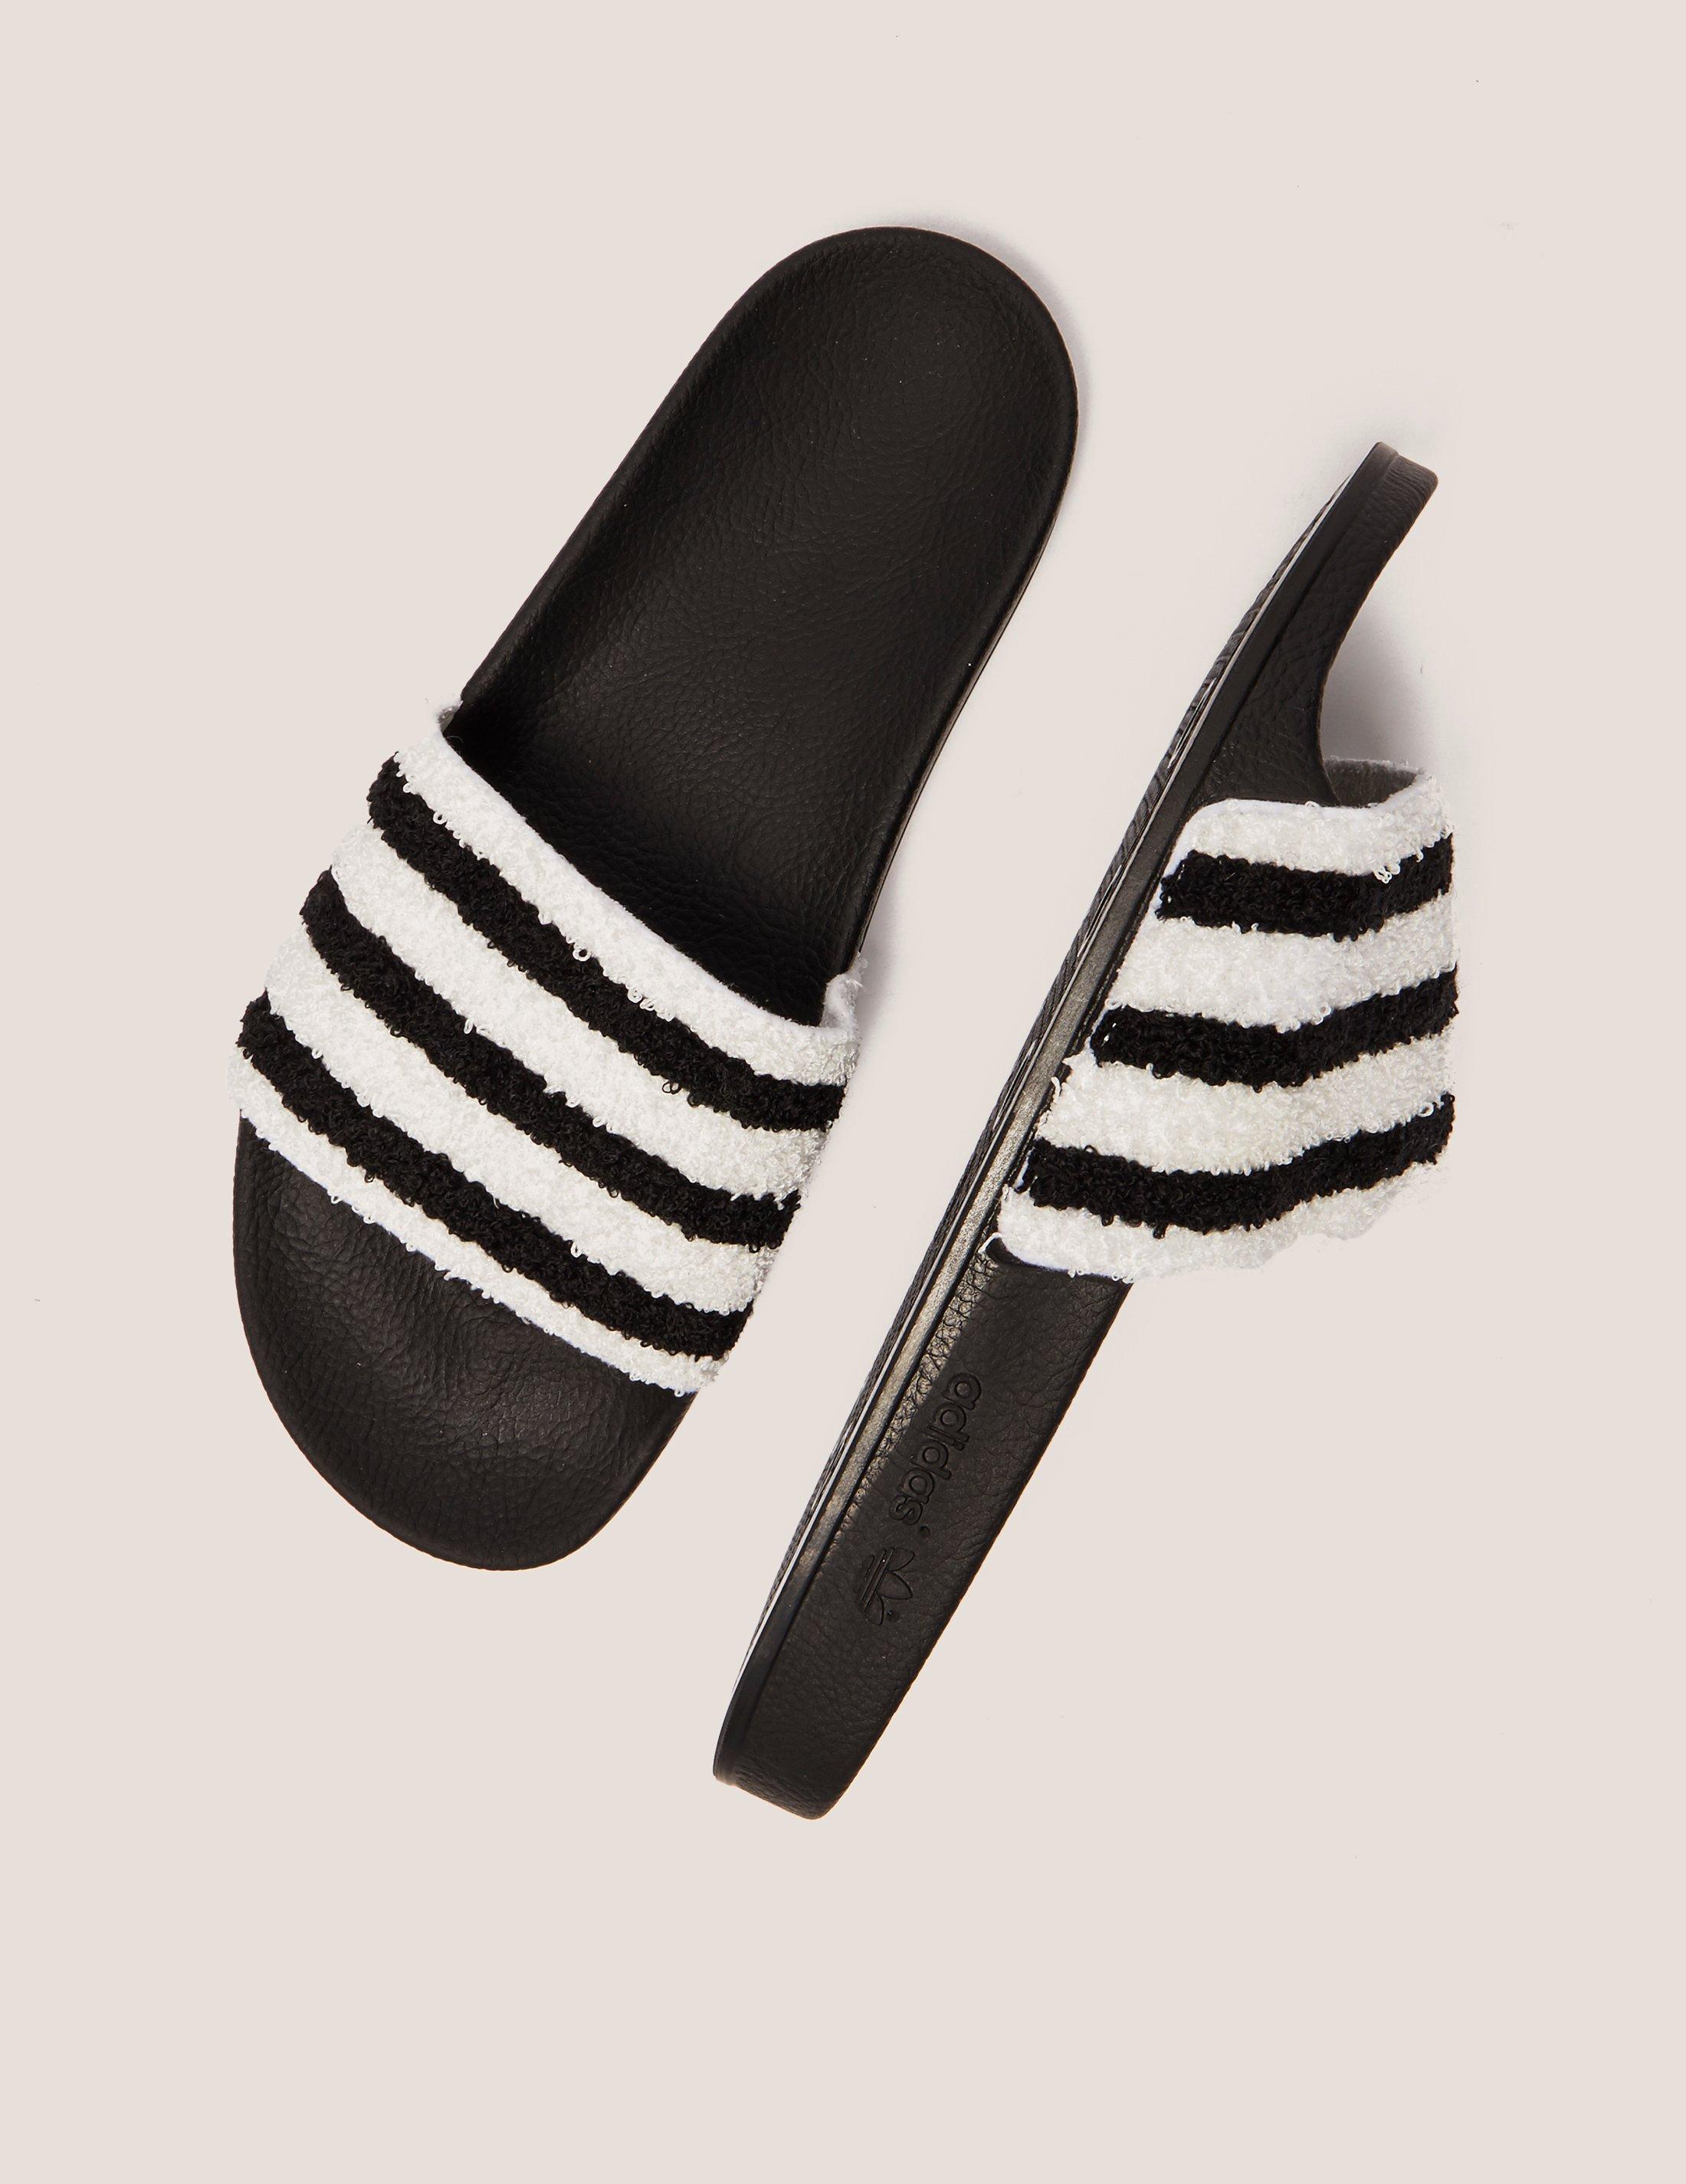 adidas Originals Rubber Adilette Towel Slides in Black/White (Black) for  Men - Lyst